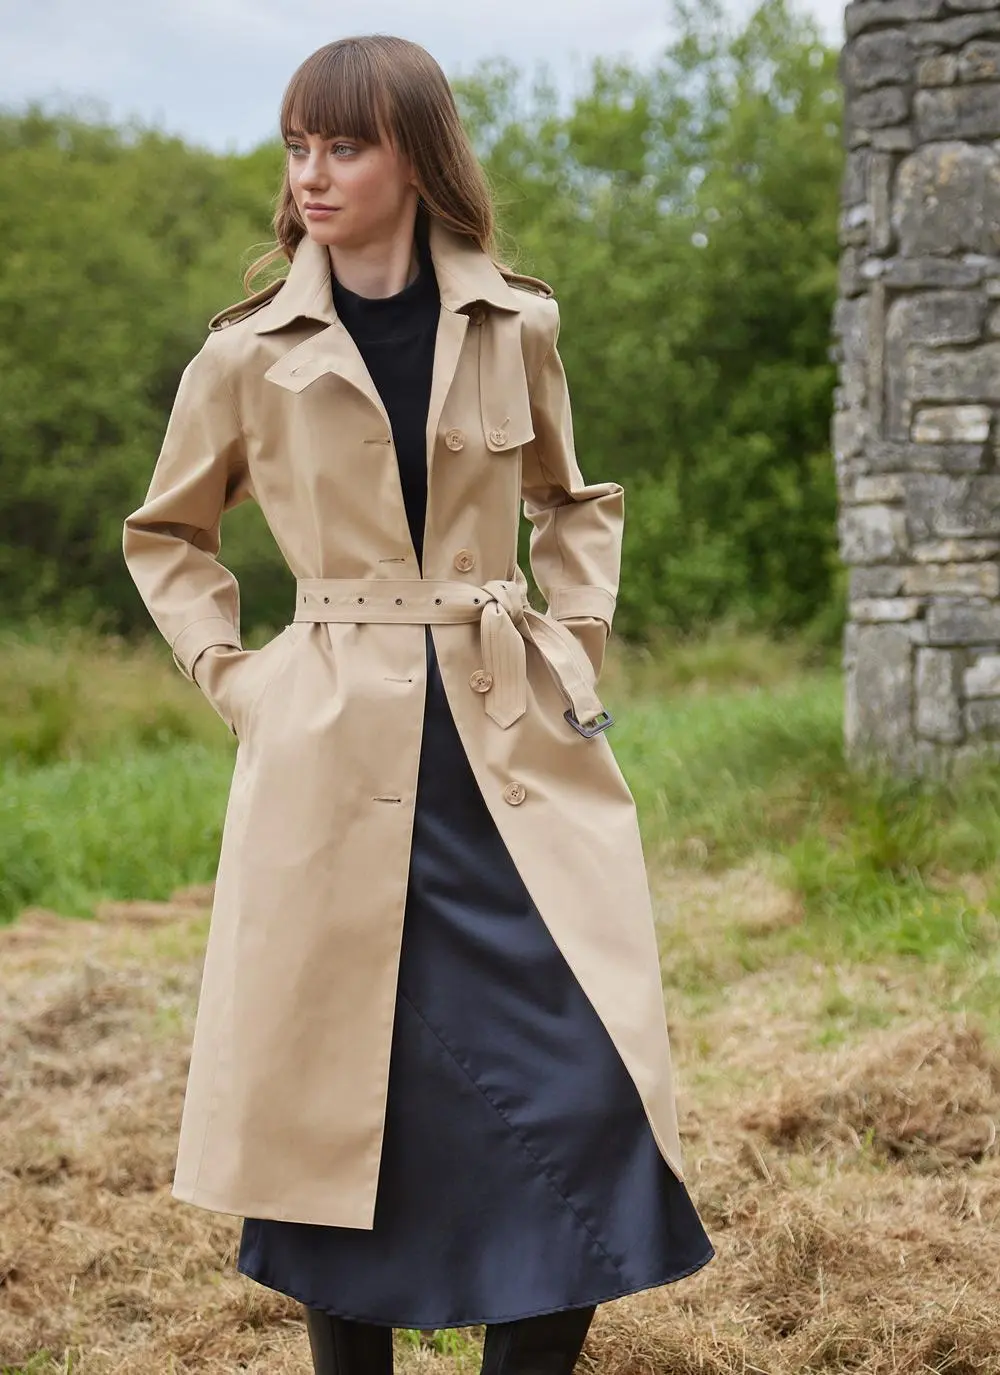 Mackintosh Trench Coat